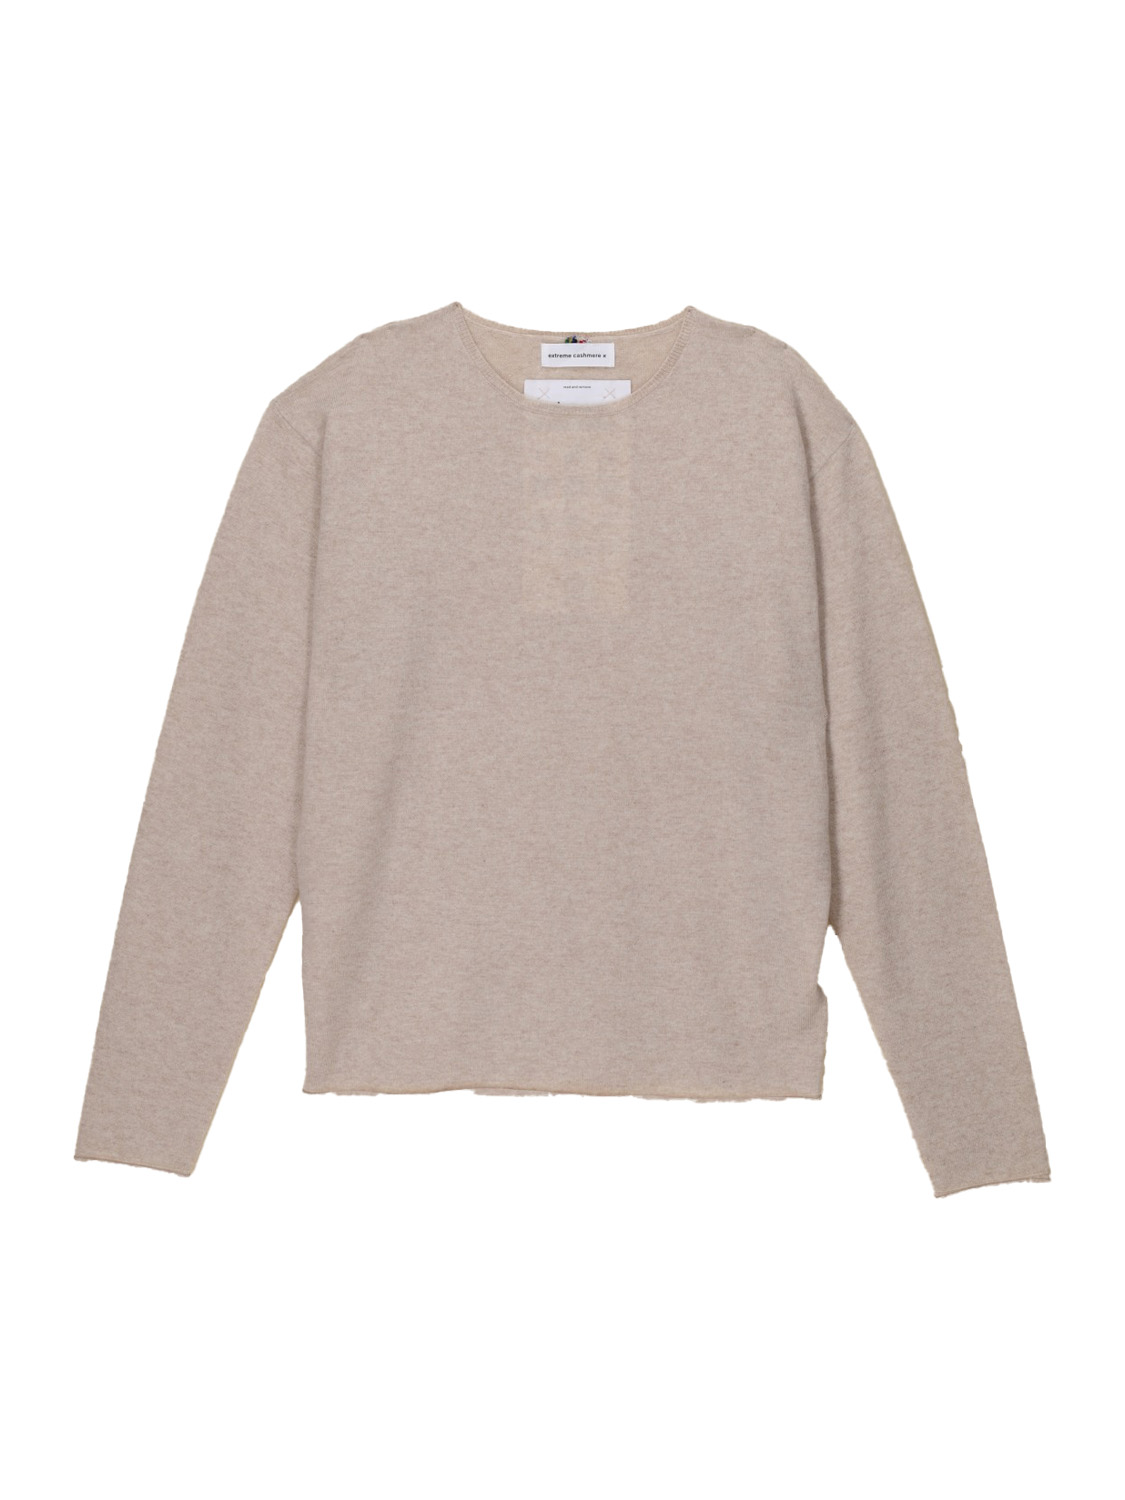 N° 314 Pisces - Lightweight cashmere sweater 